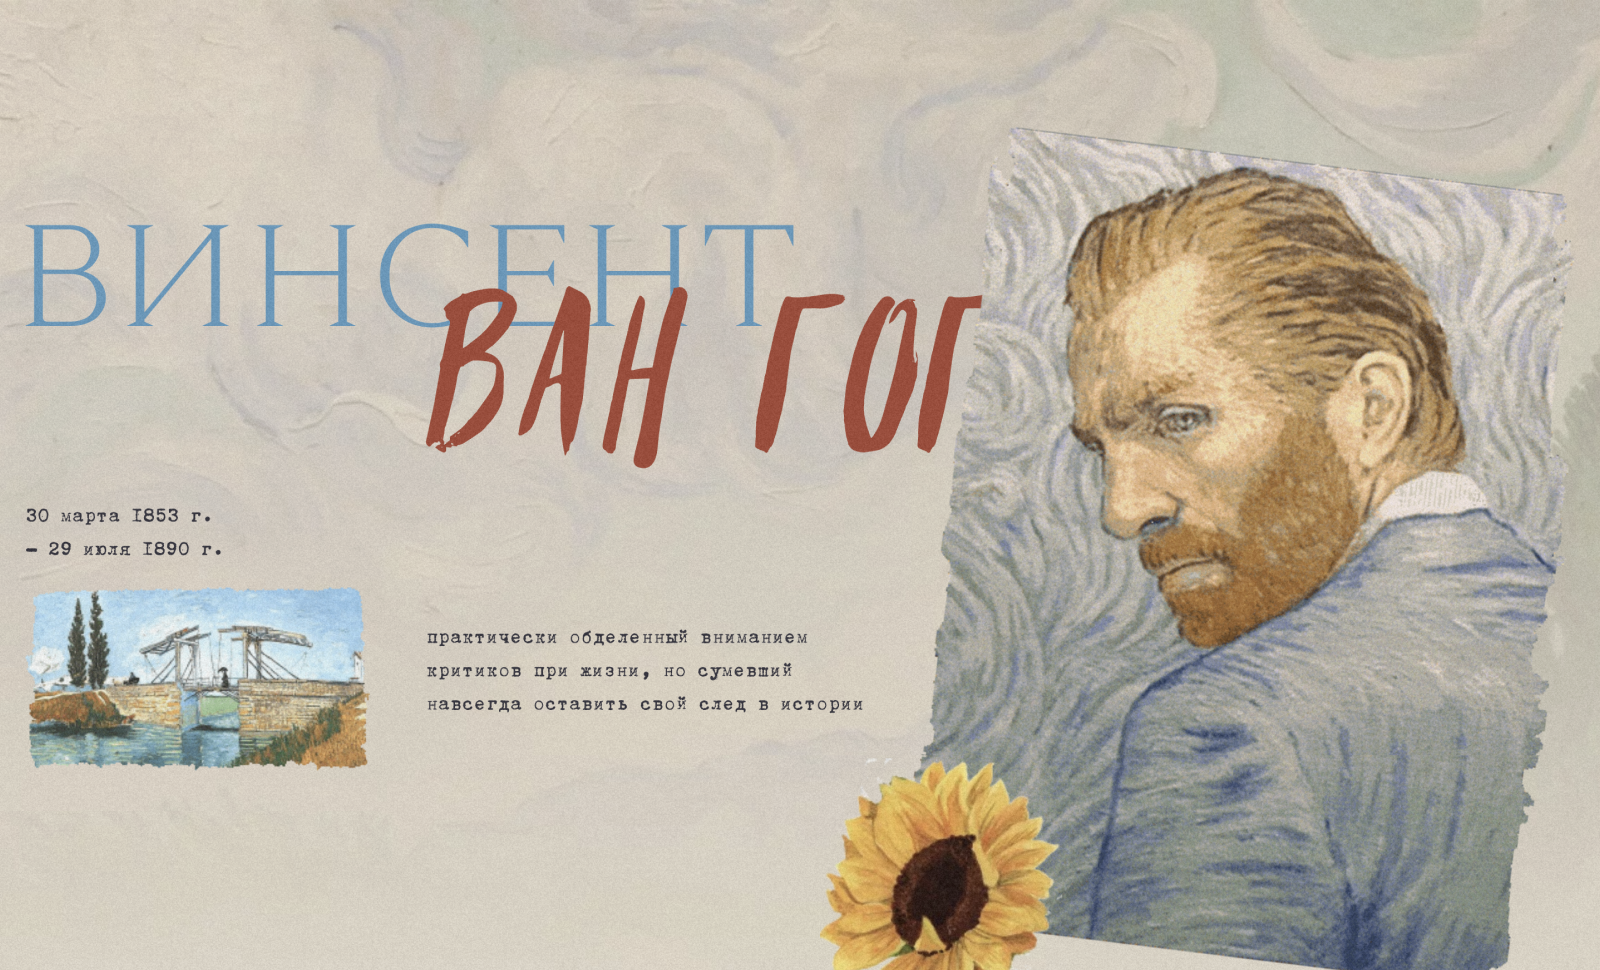 Biography of Vincent van Gogh